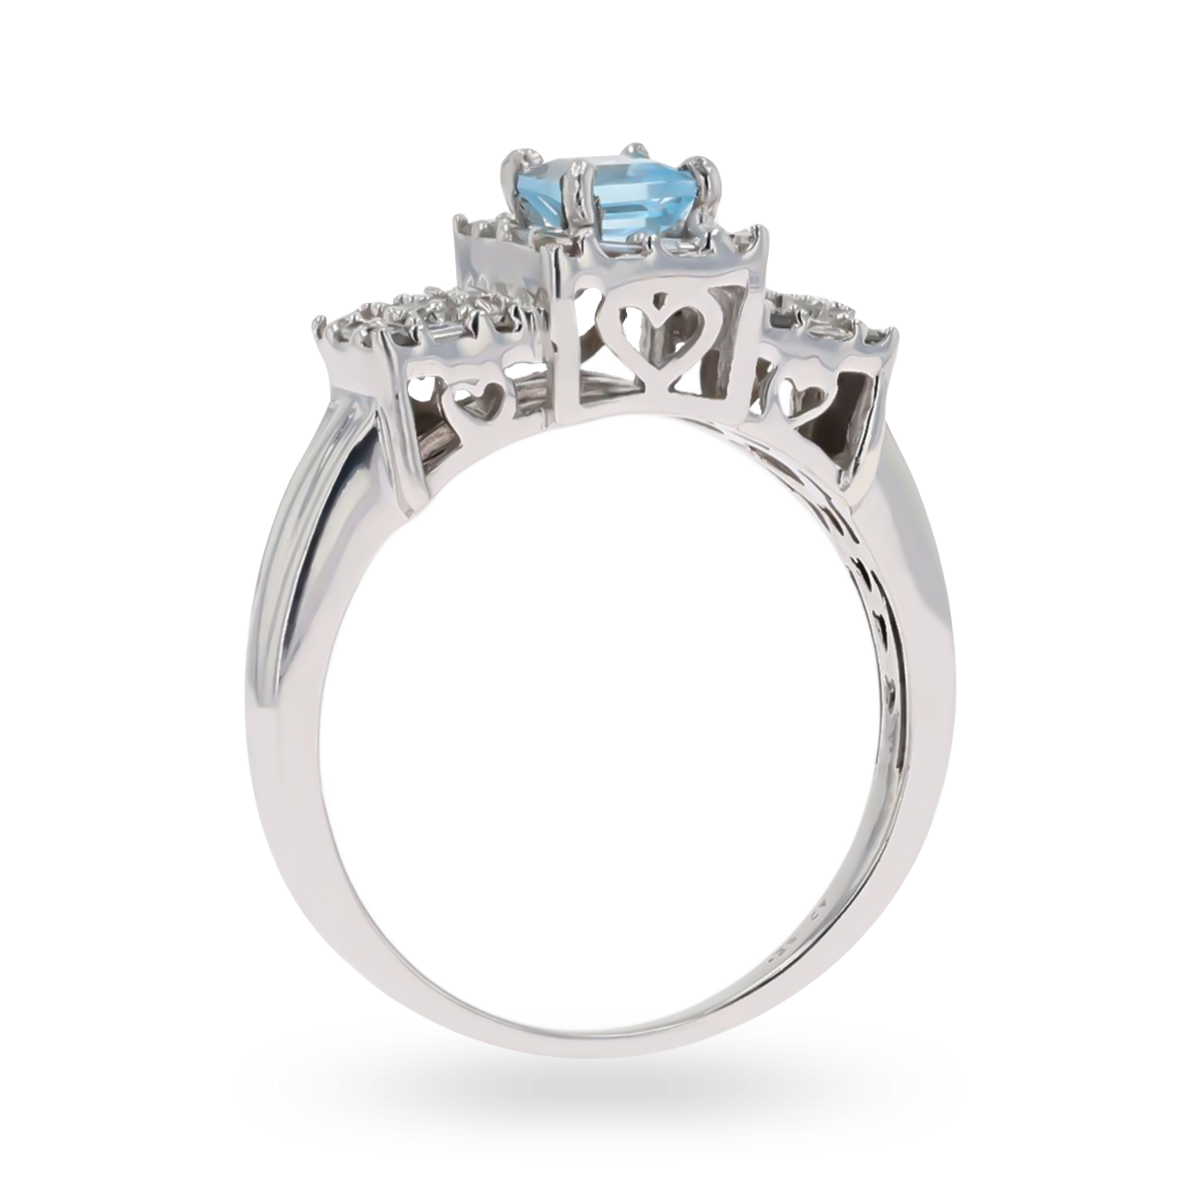 9ct White Gold "Le Coeur" Sky Blue Topaz & Diamond Ring